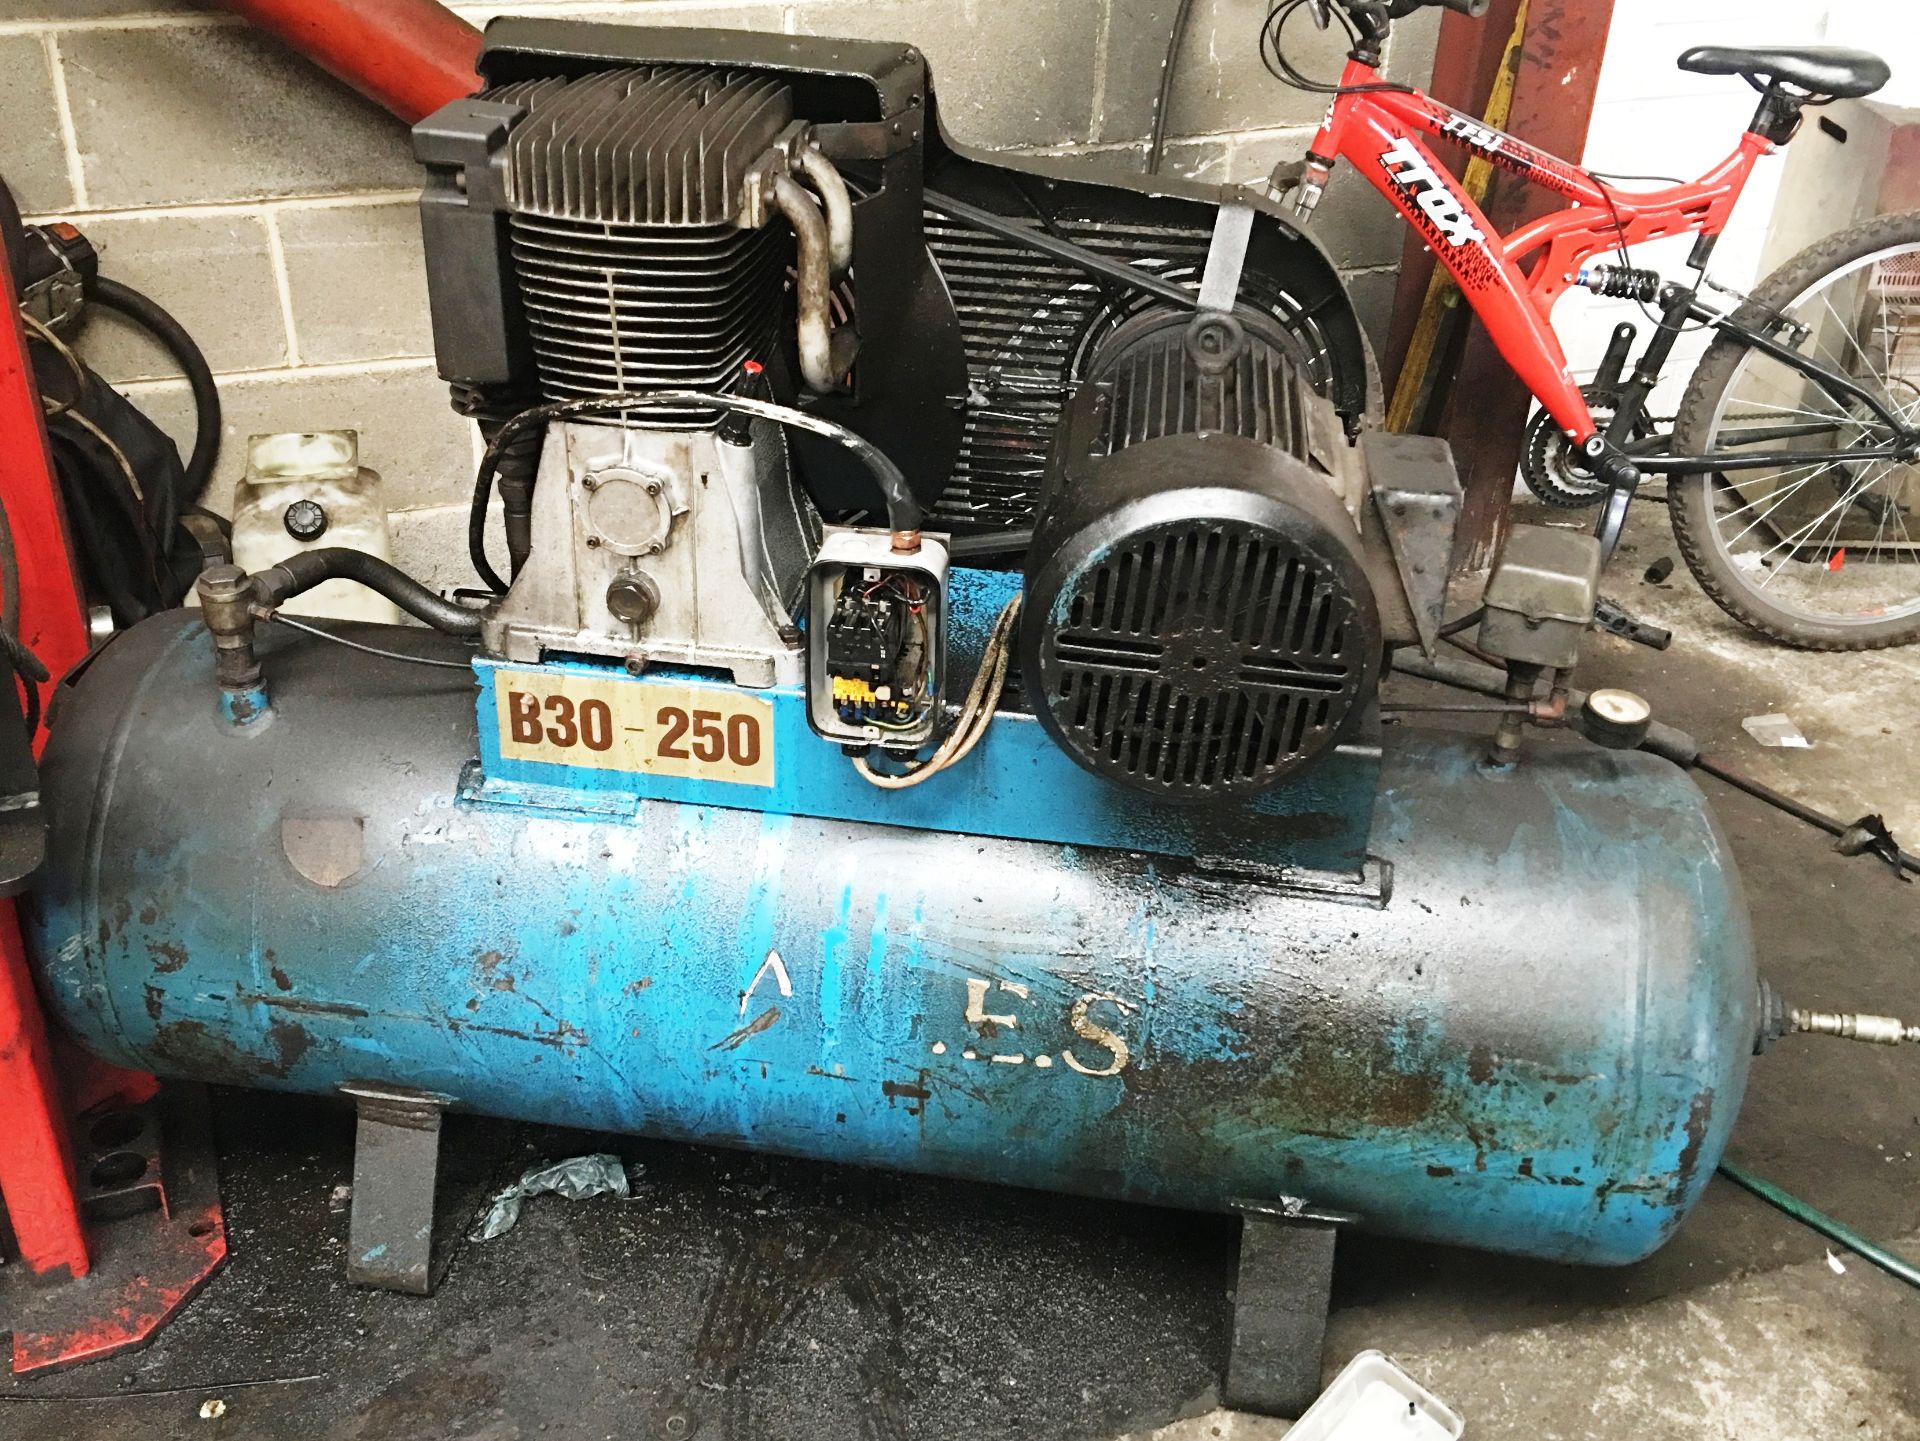 Compressor - blue Ref B30/250 - 3 phase